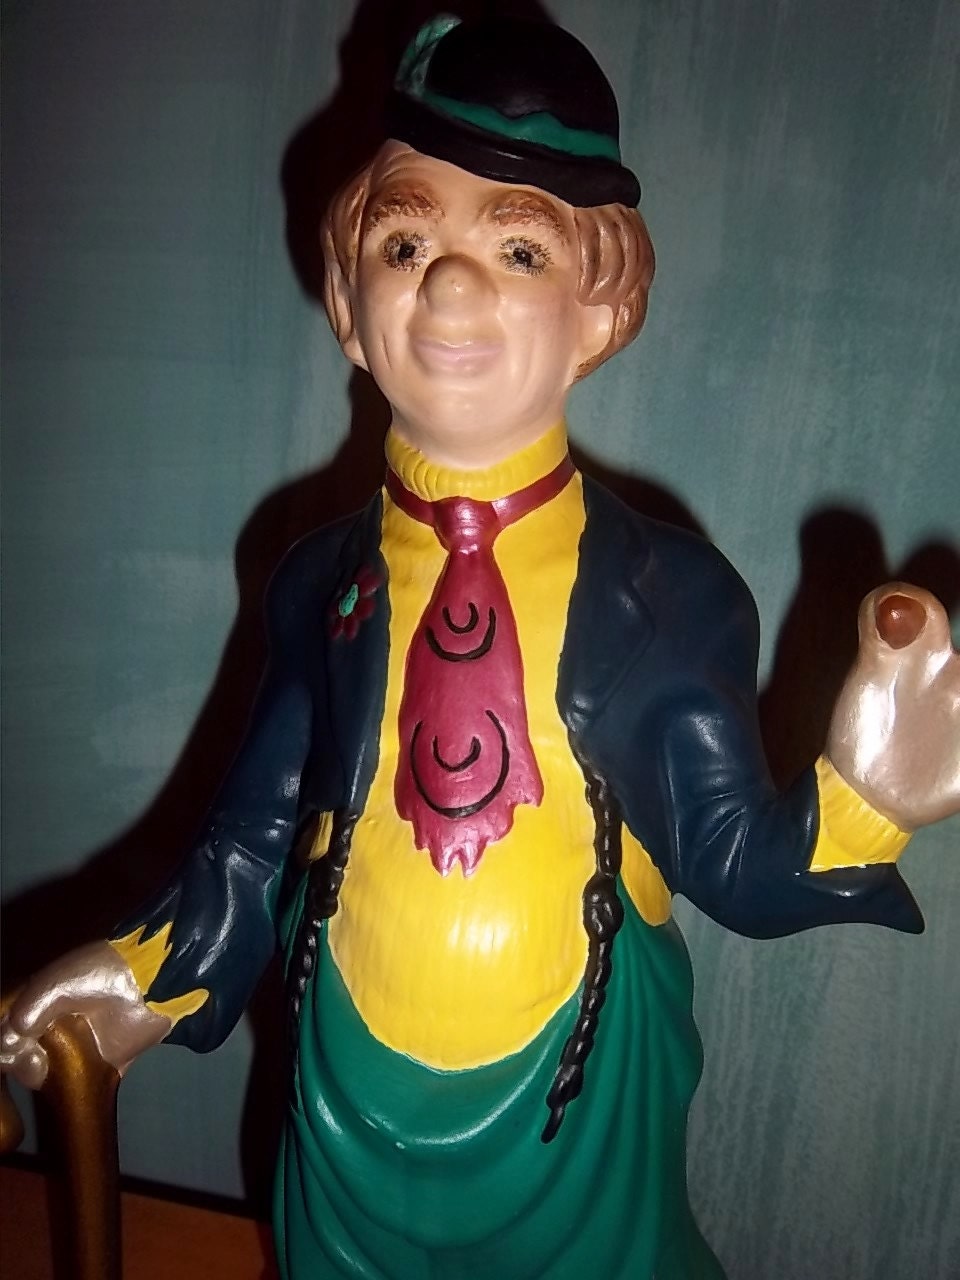 hobo clown figurines